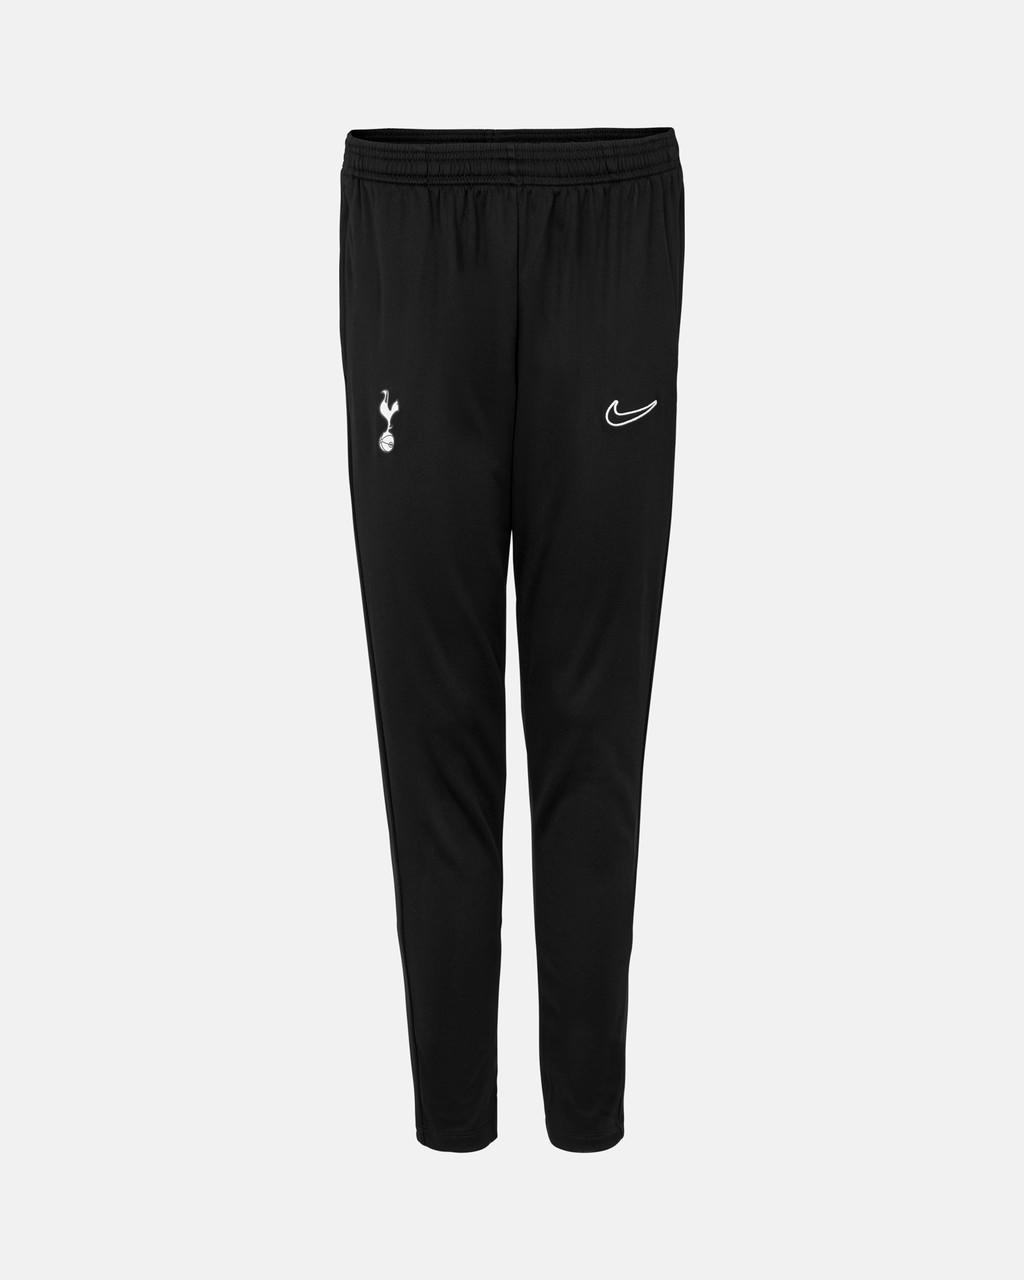 Spurs Womens Nike Black Leggings